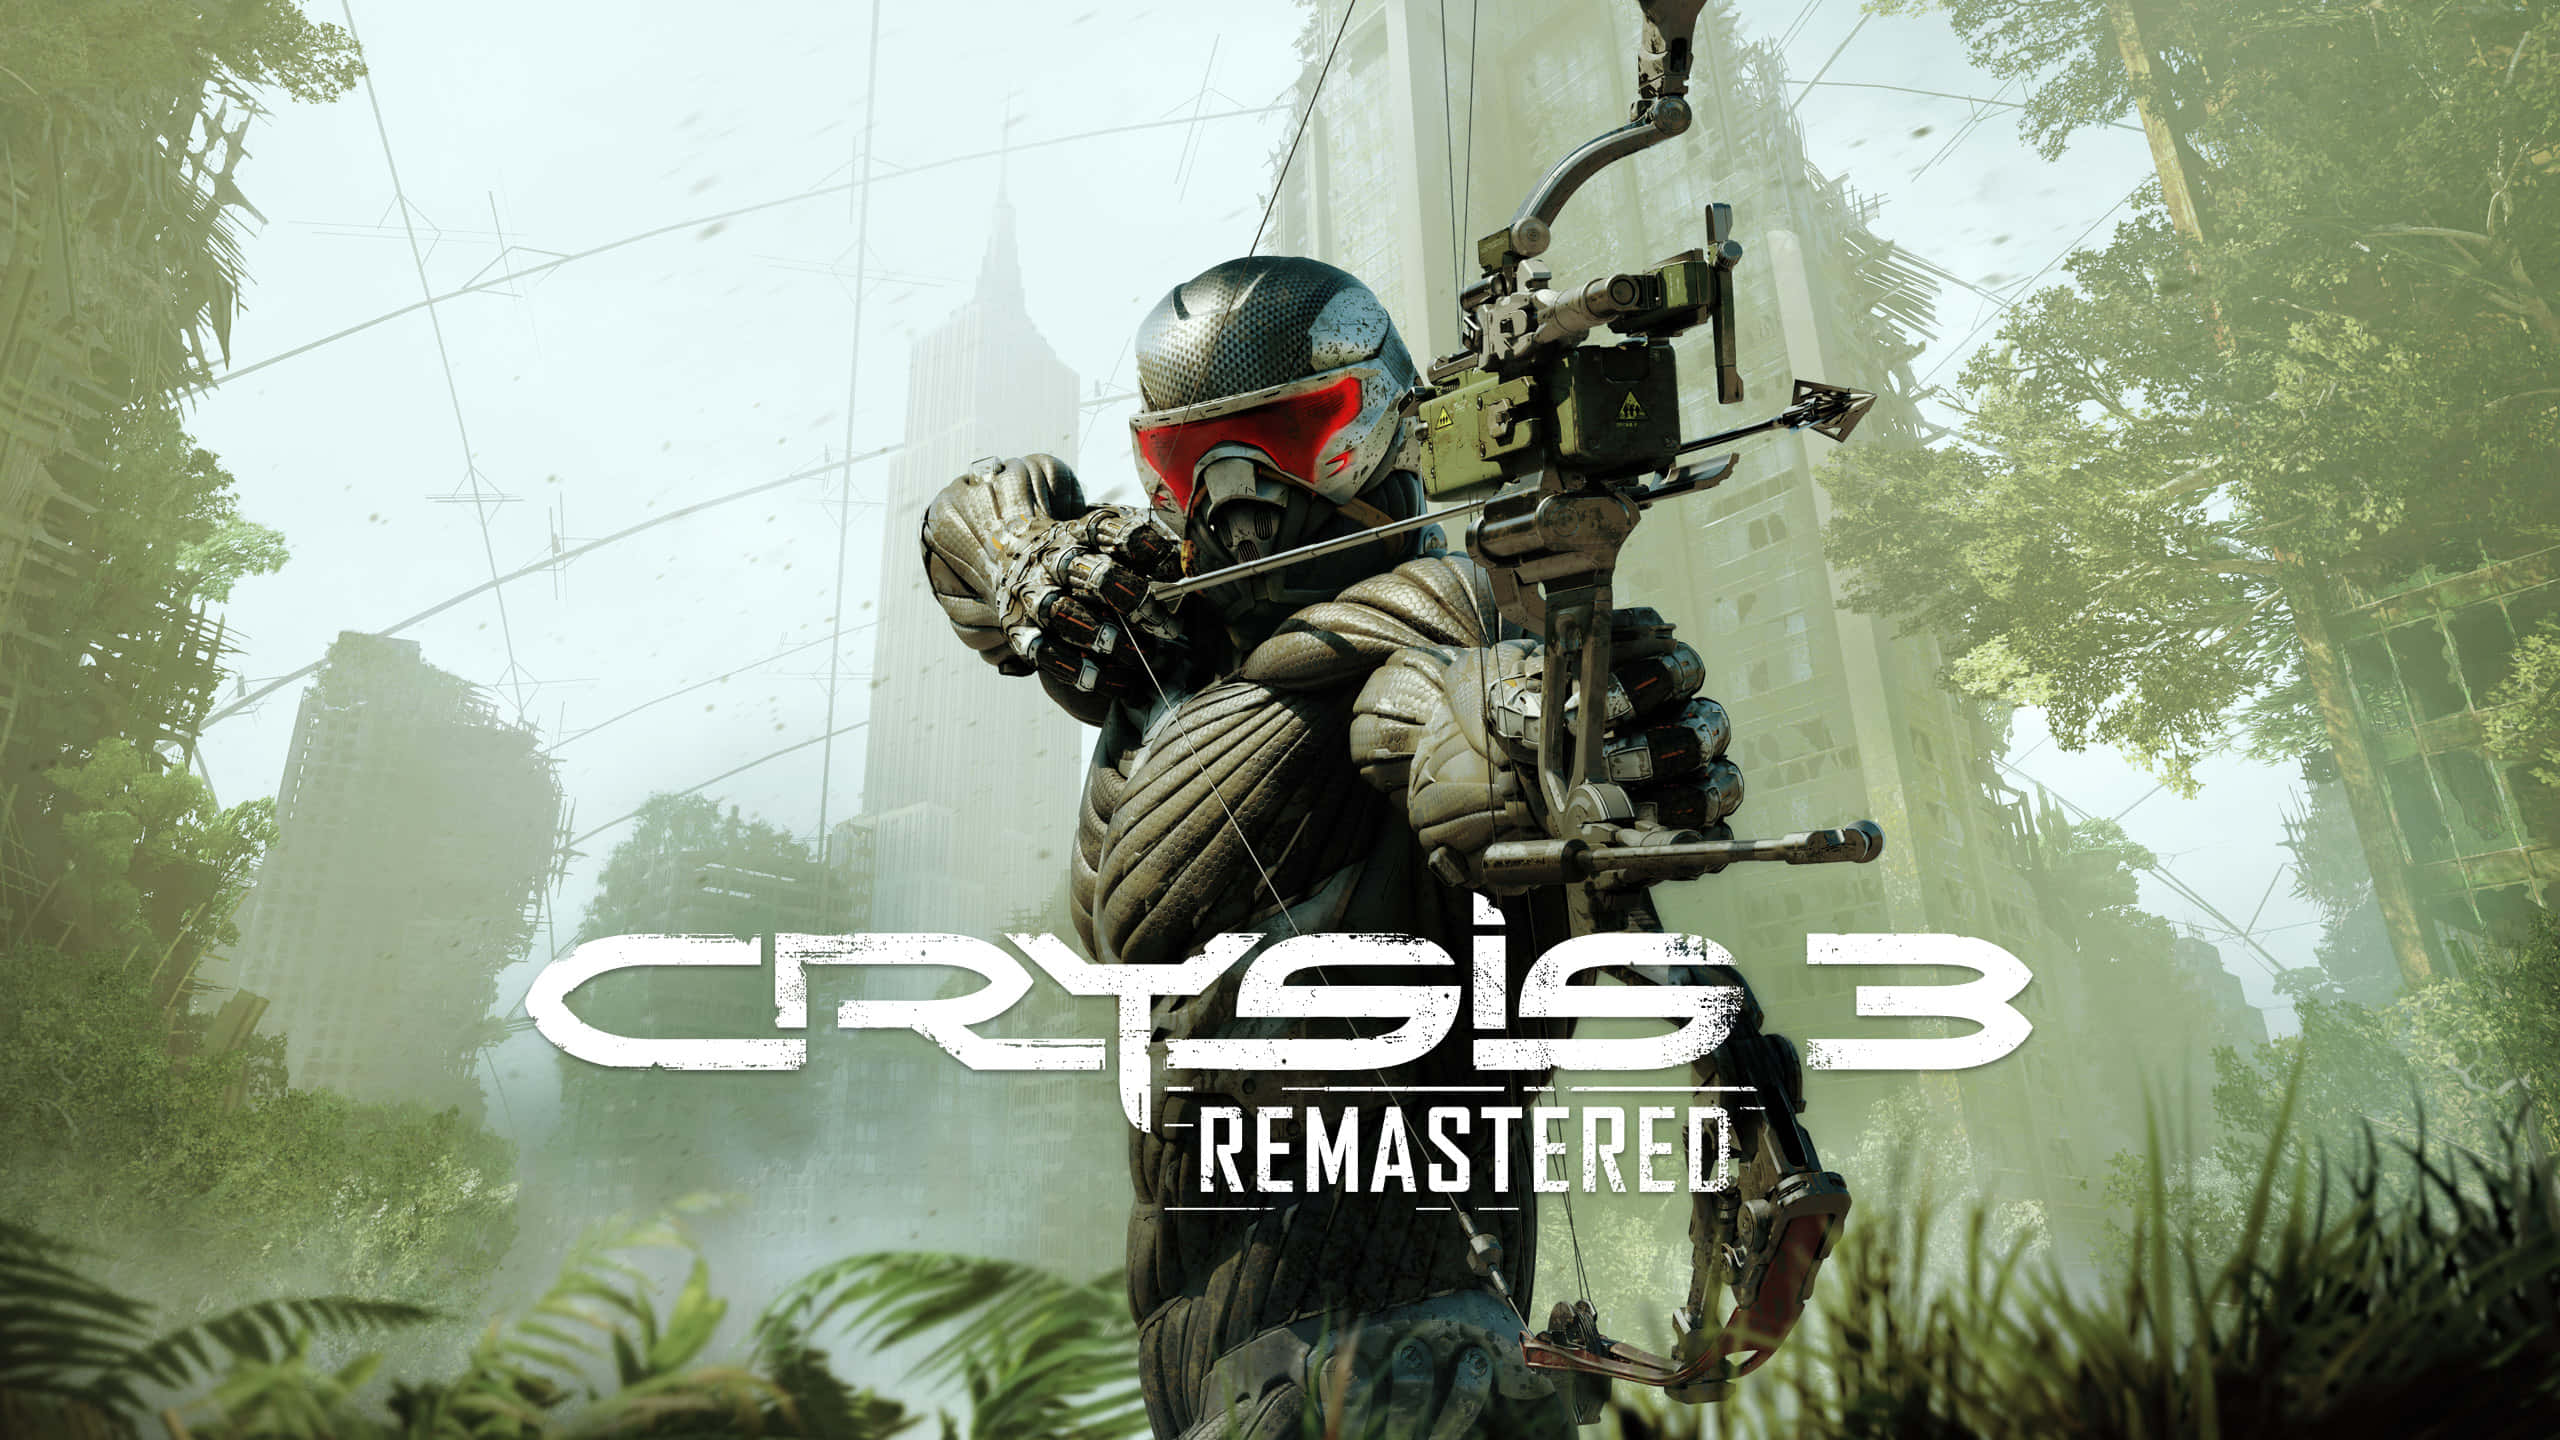 Crysis 3 Background